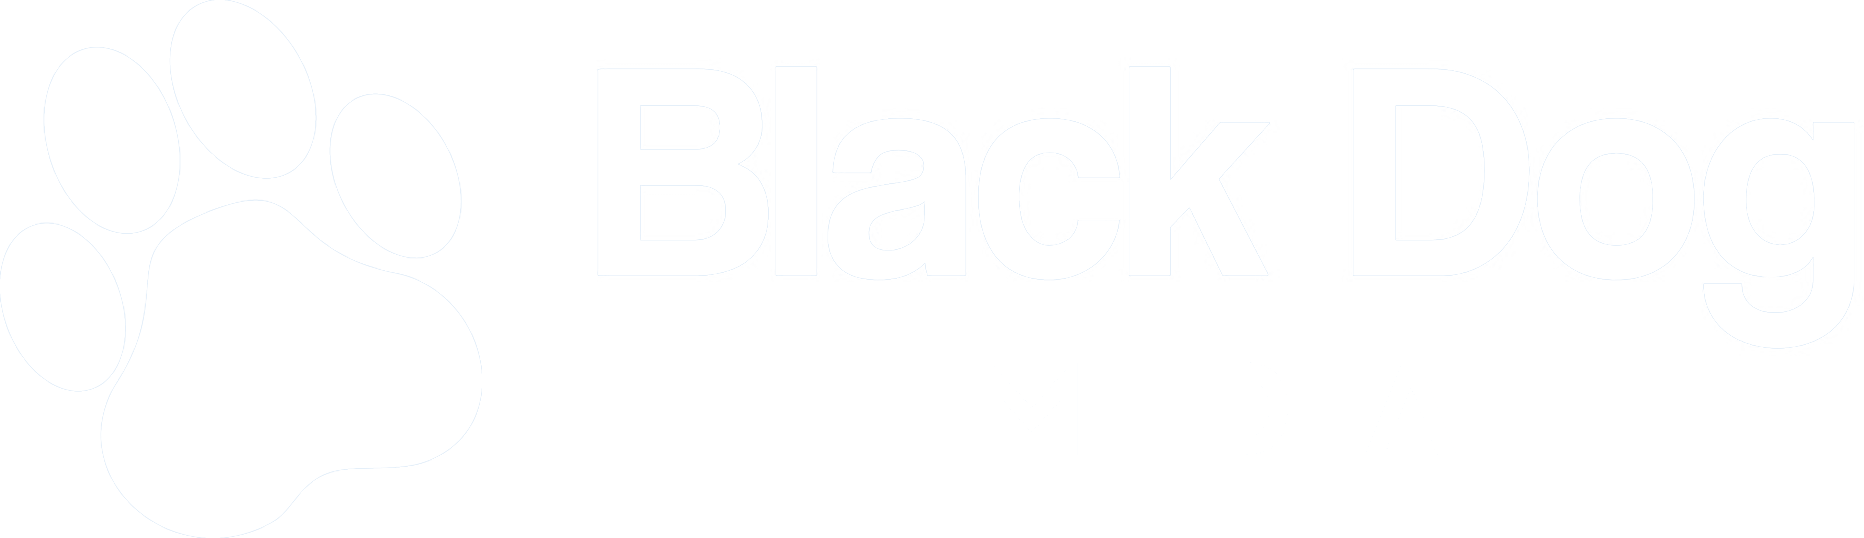 Black Dog Media